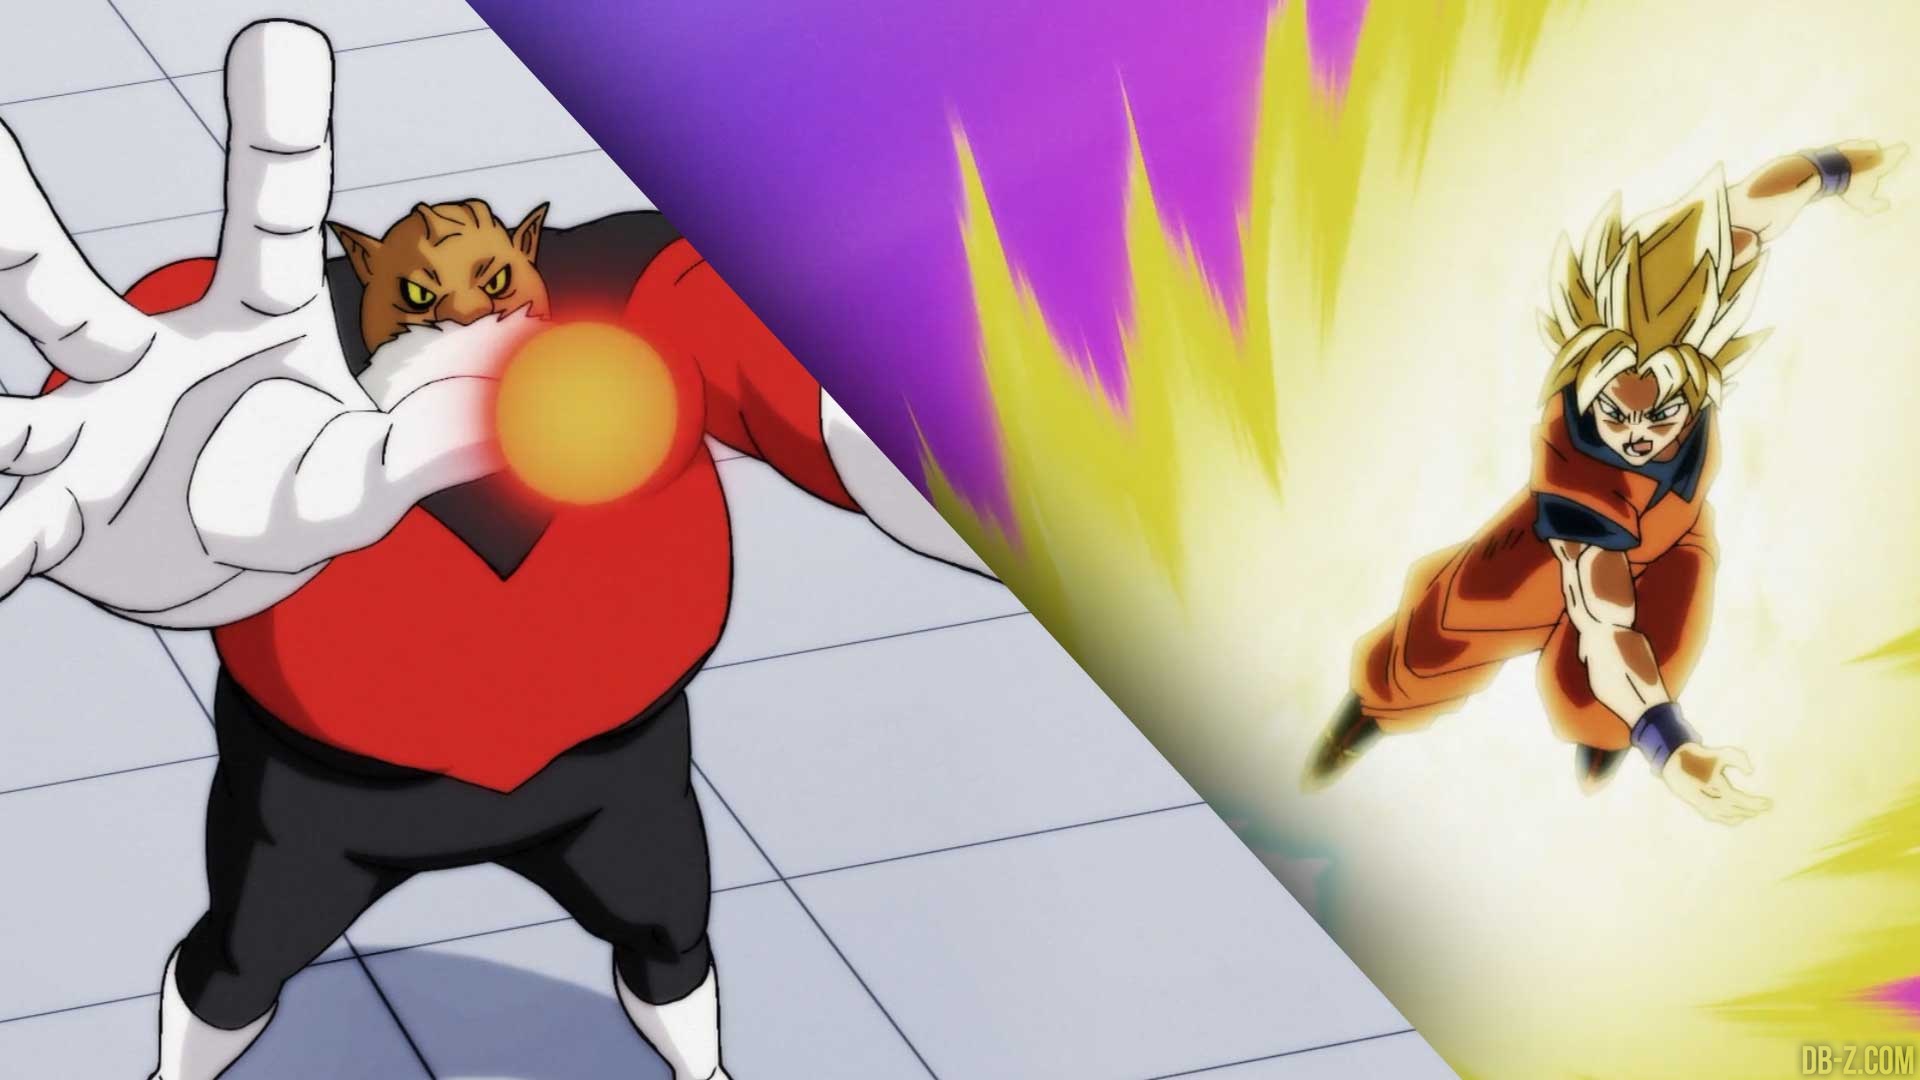 Dragon Ball Super Episode 82 - Goku vs Toppo